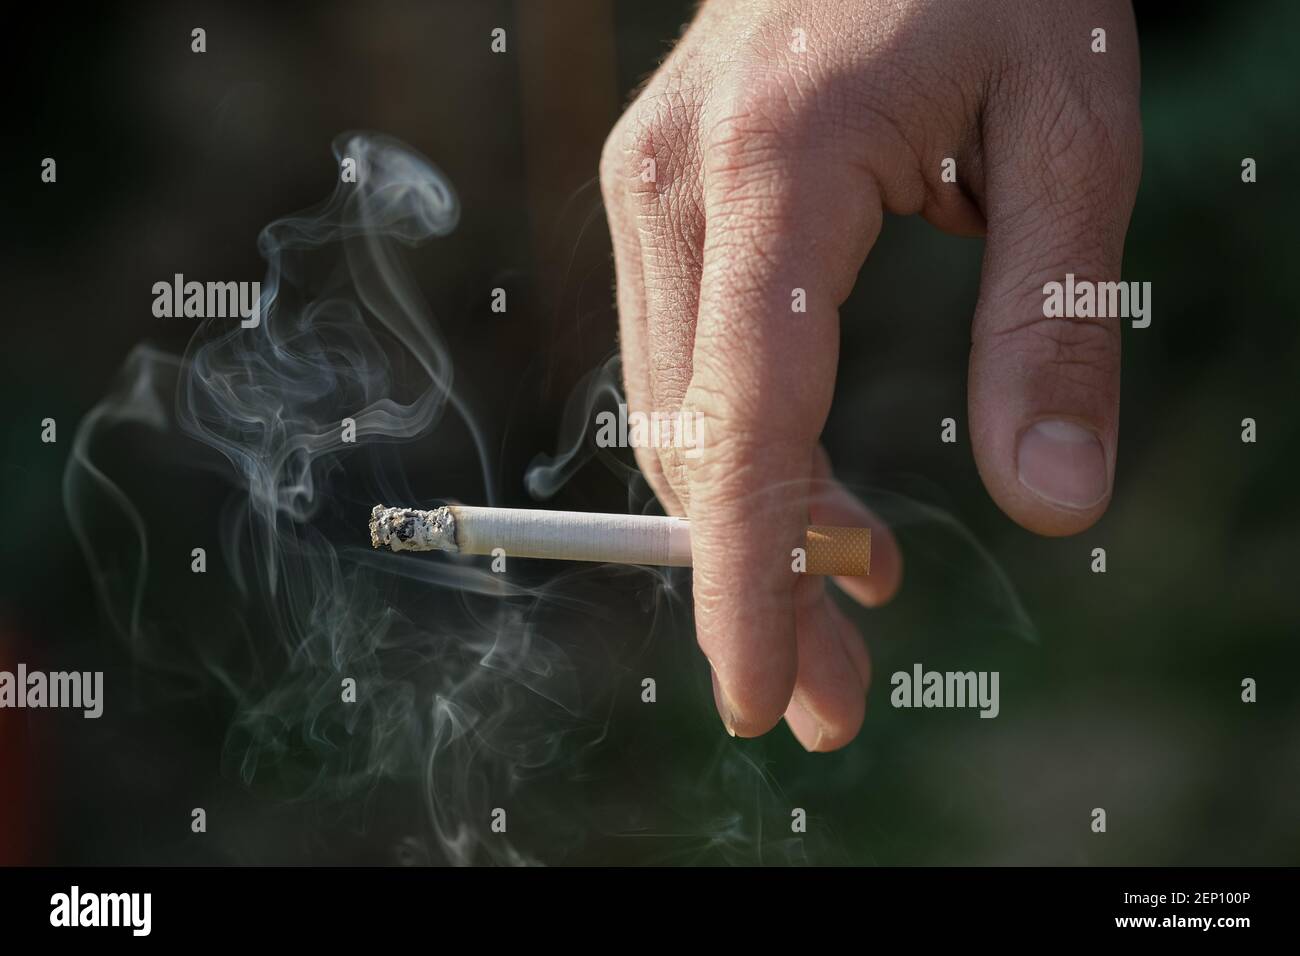 Man hand hold burning cigarette while smoking,tobacco smoke addiction,unhealthy lifestyle Stock Photo